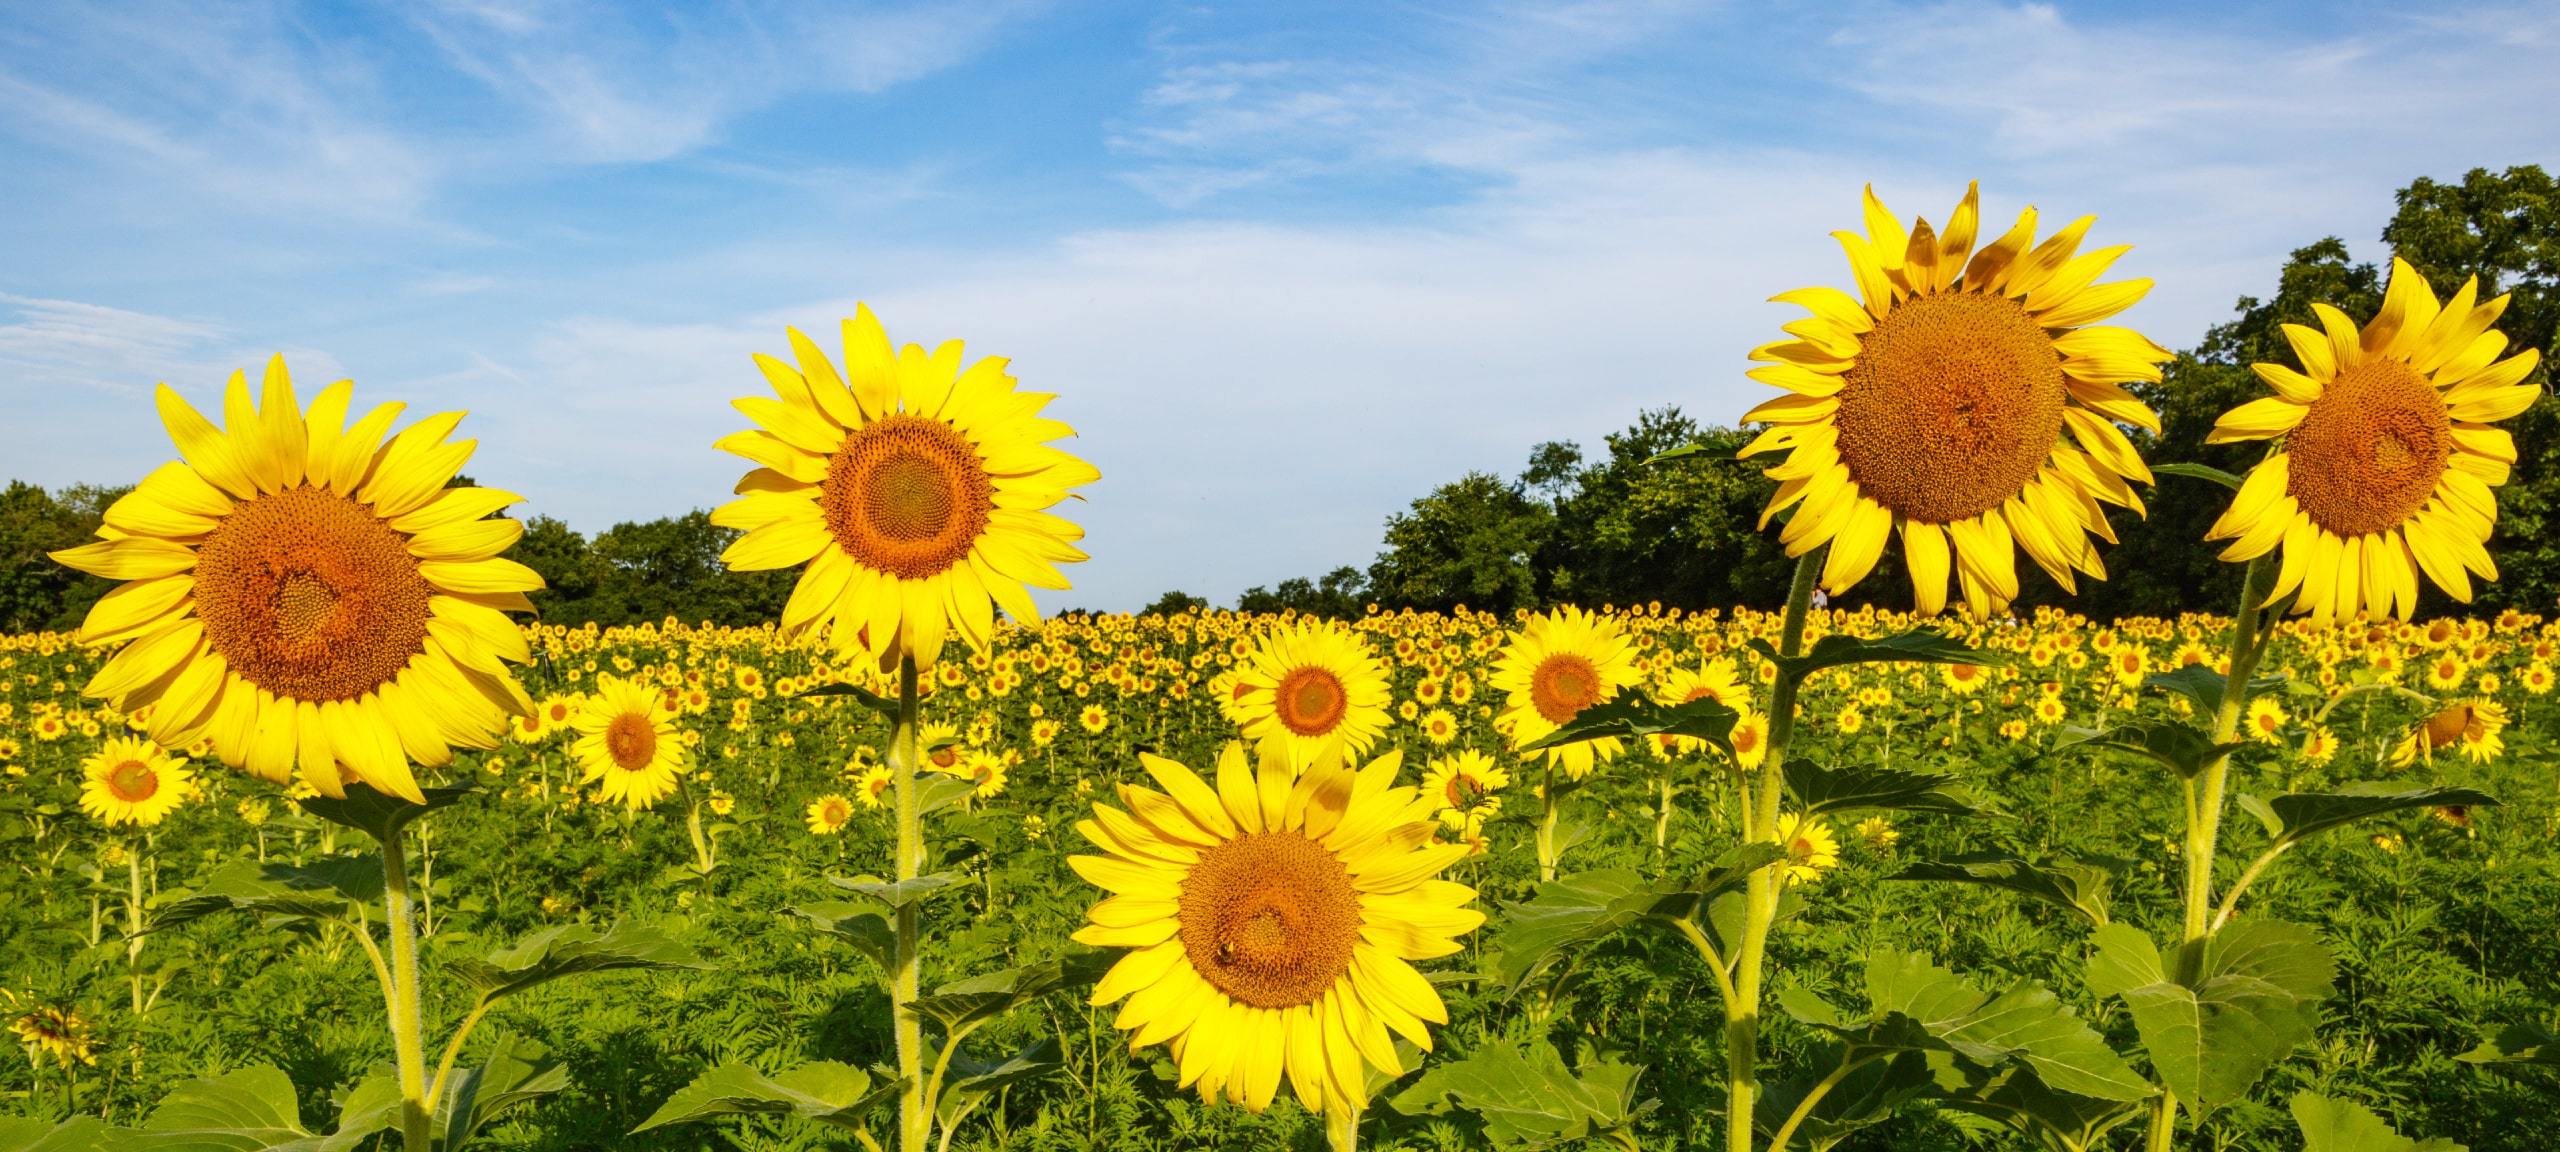 Sunflower field in Carroll County, Maryland